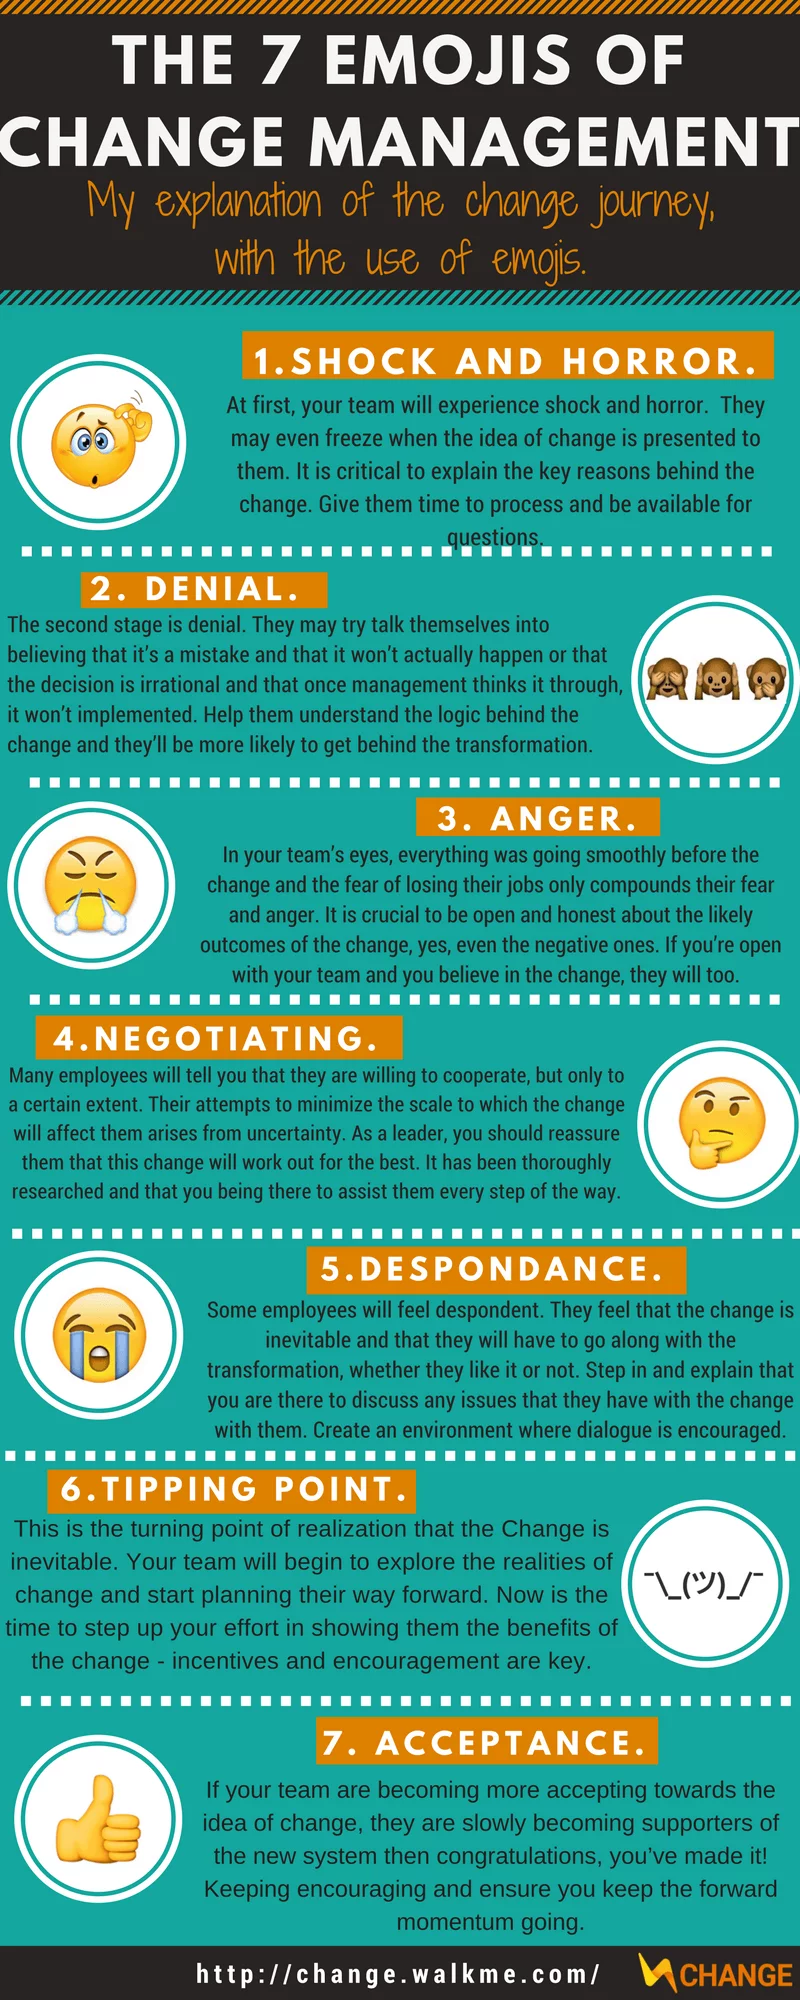 The 7 Emojis of Change Management (2)